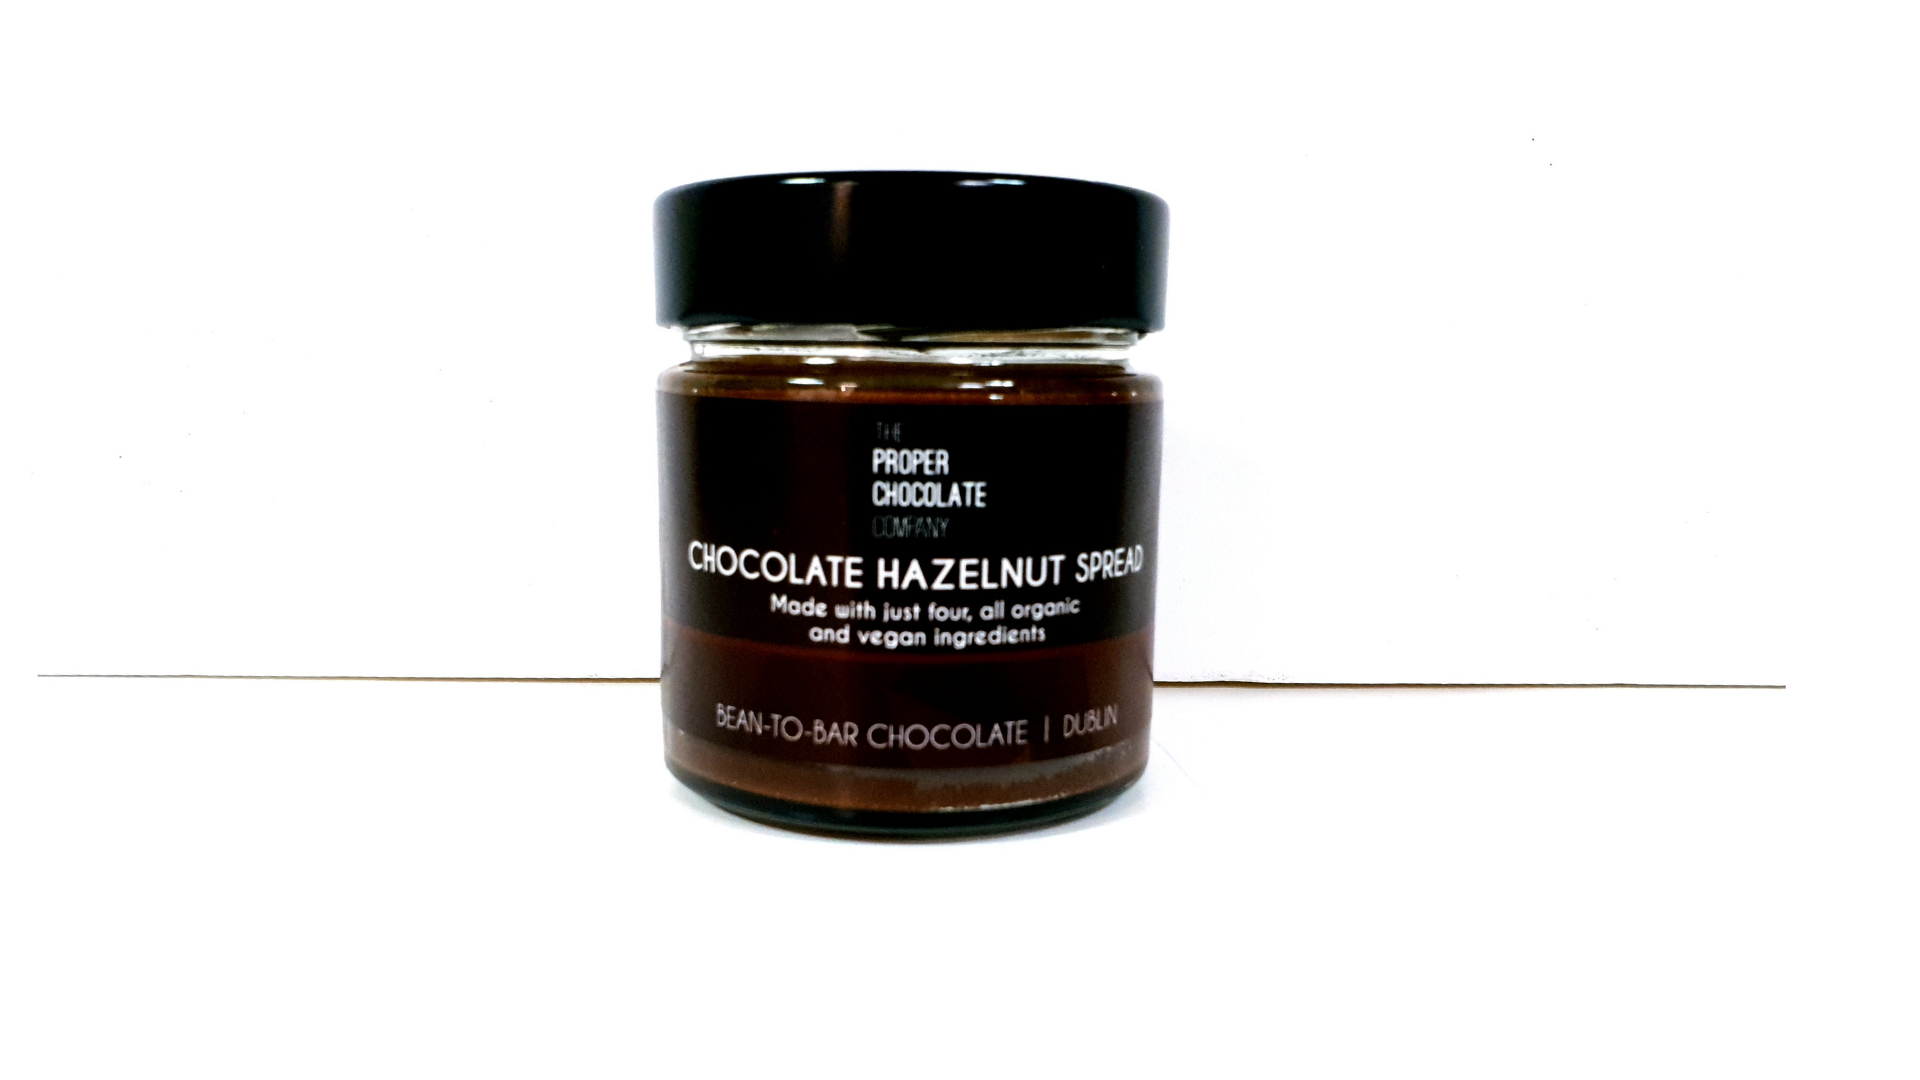 Chocolate Hazelnut Spread - 4 ingredients, all organic